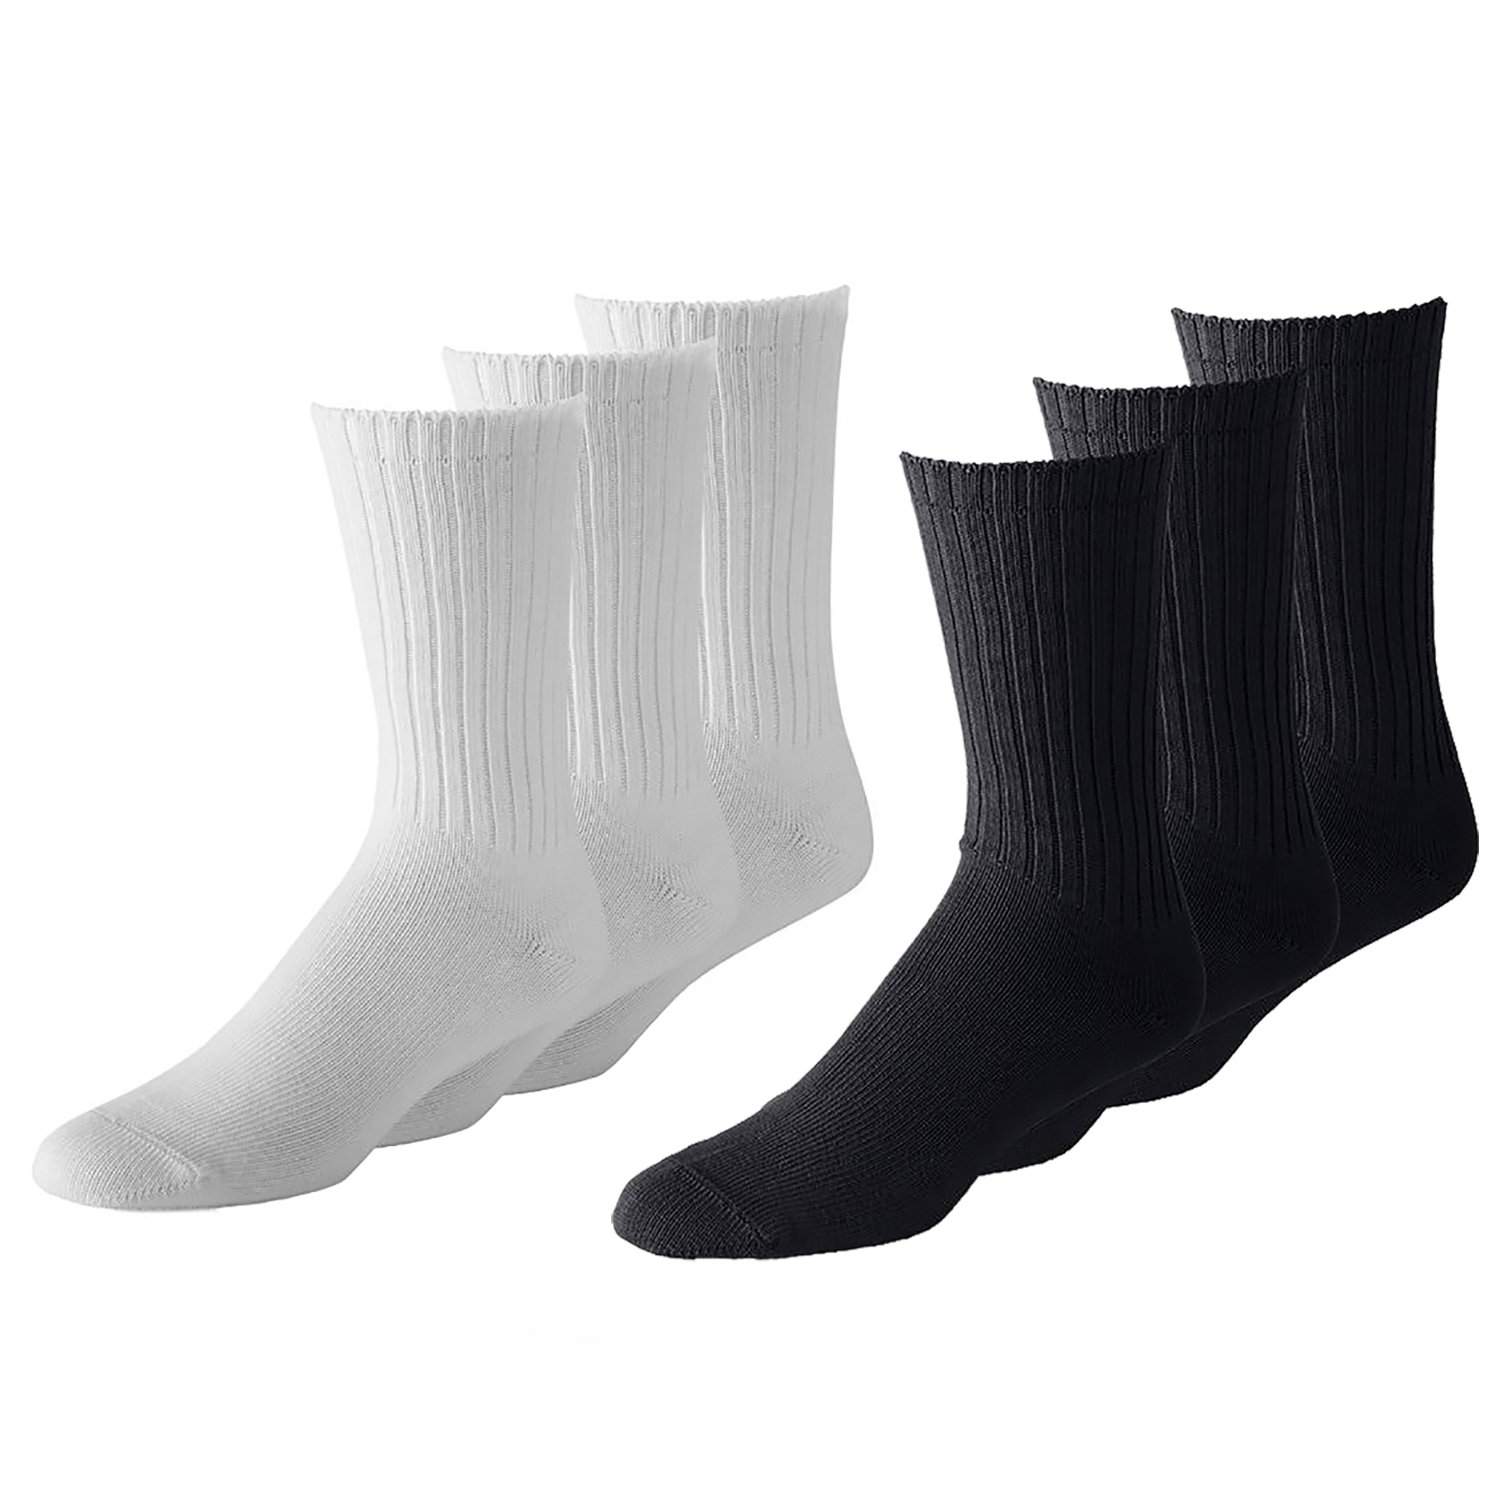 Unisex Crew Athletic Sports Cotton Socks  48 Pack